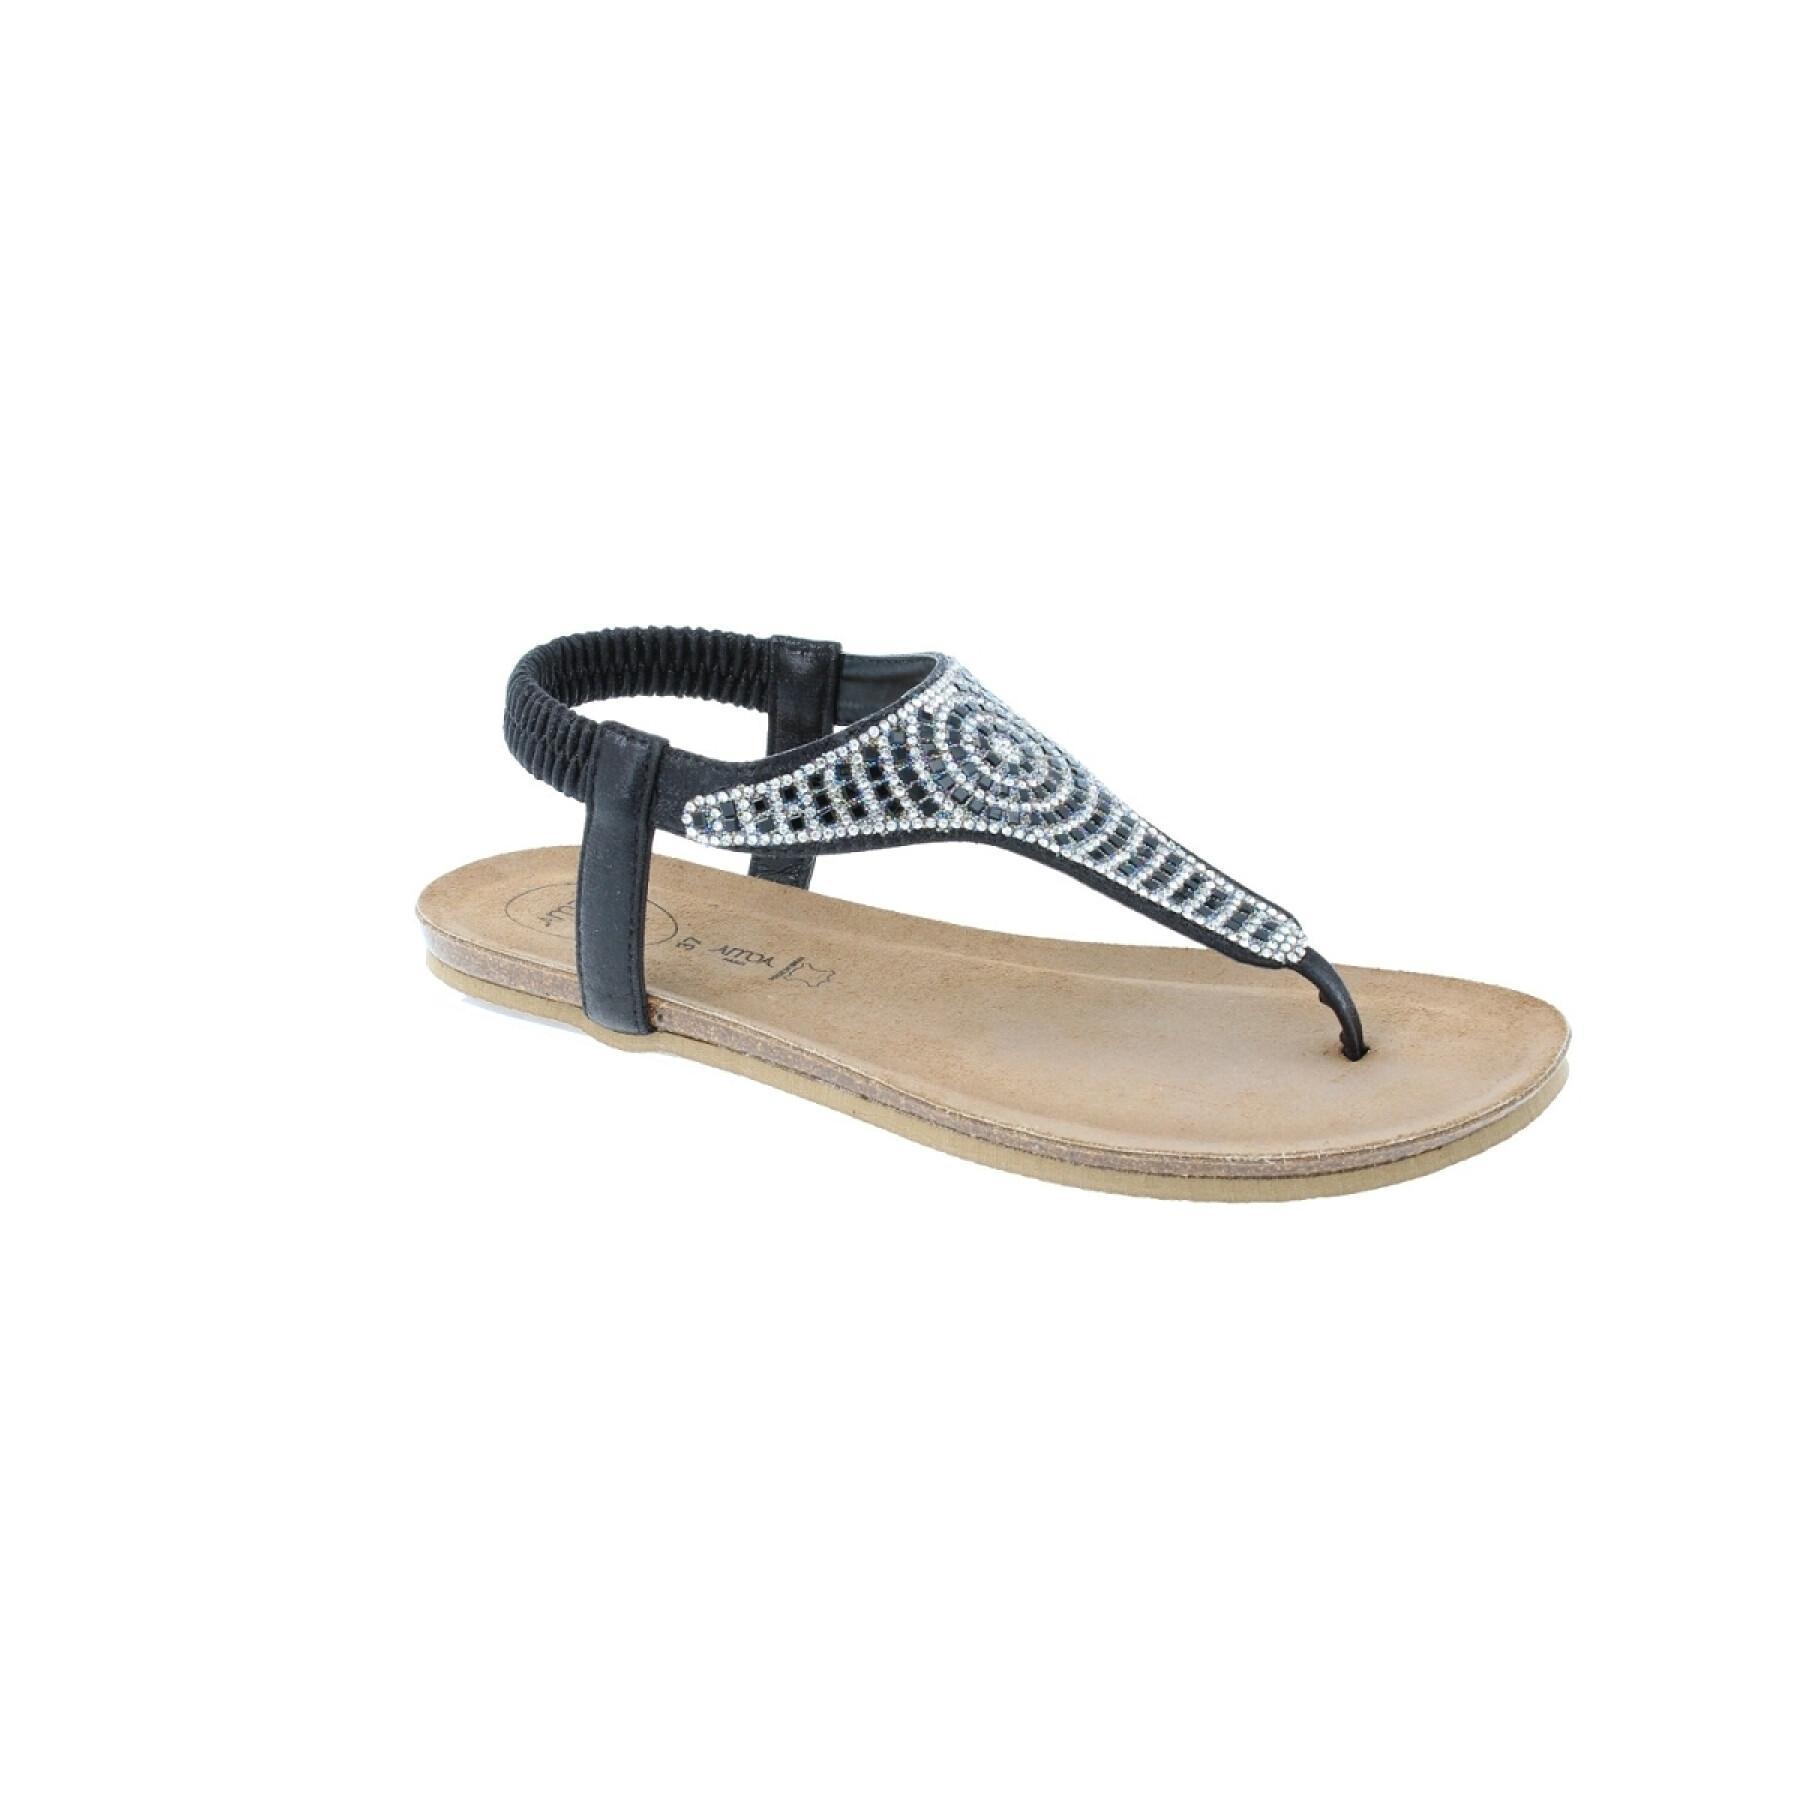 Women's sandals Amoa Cancane